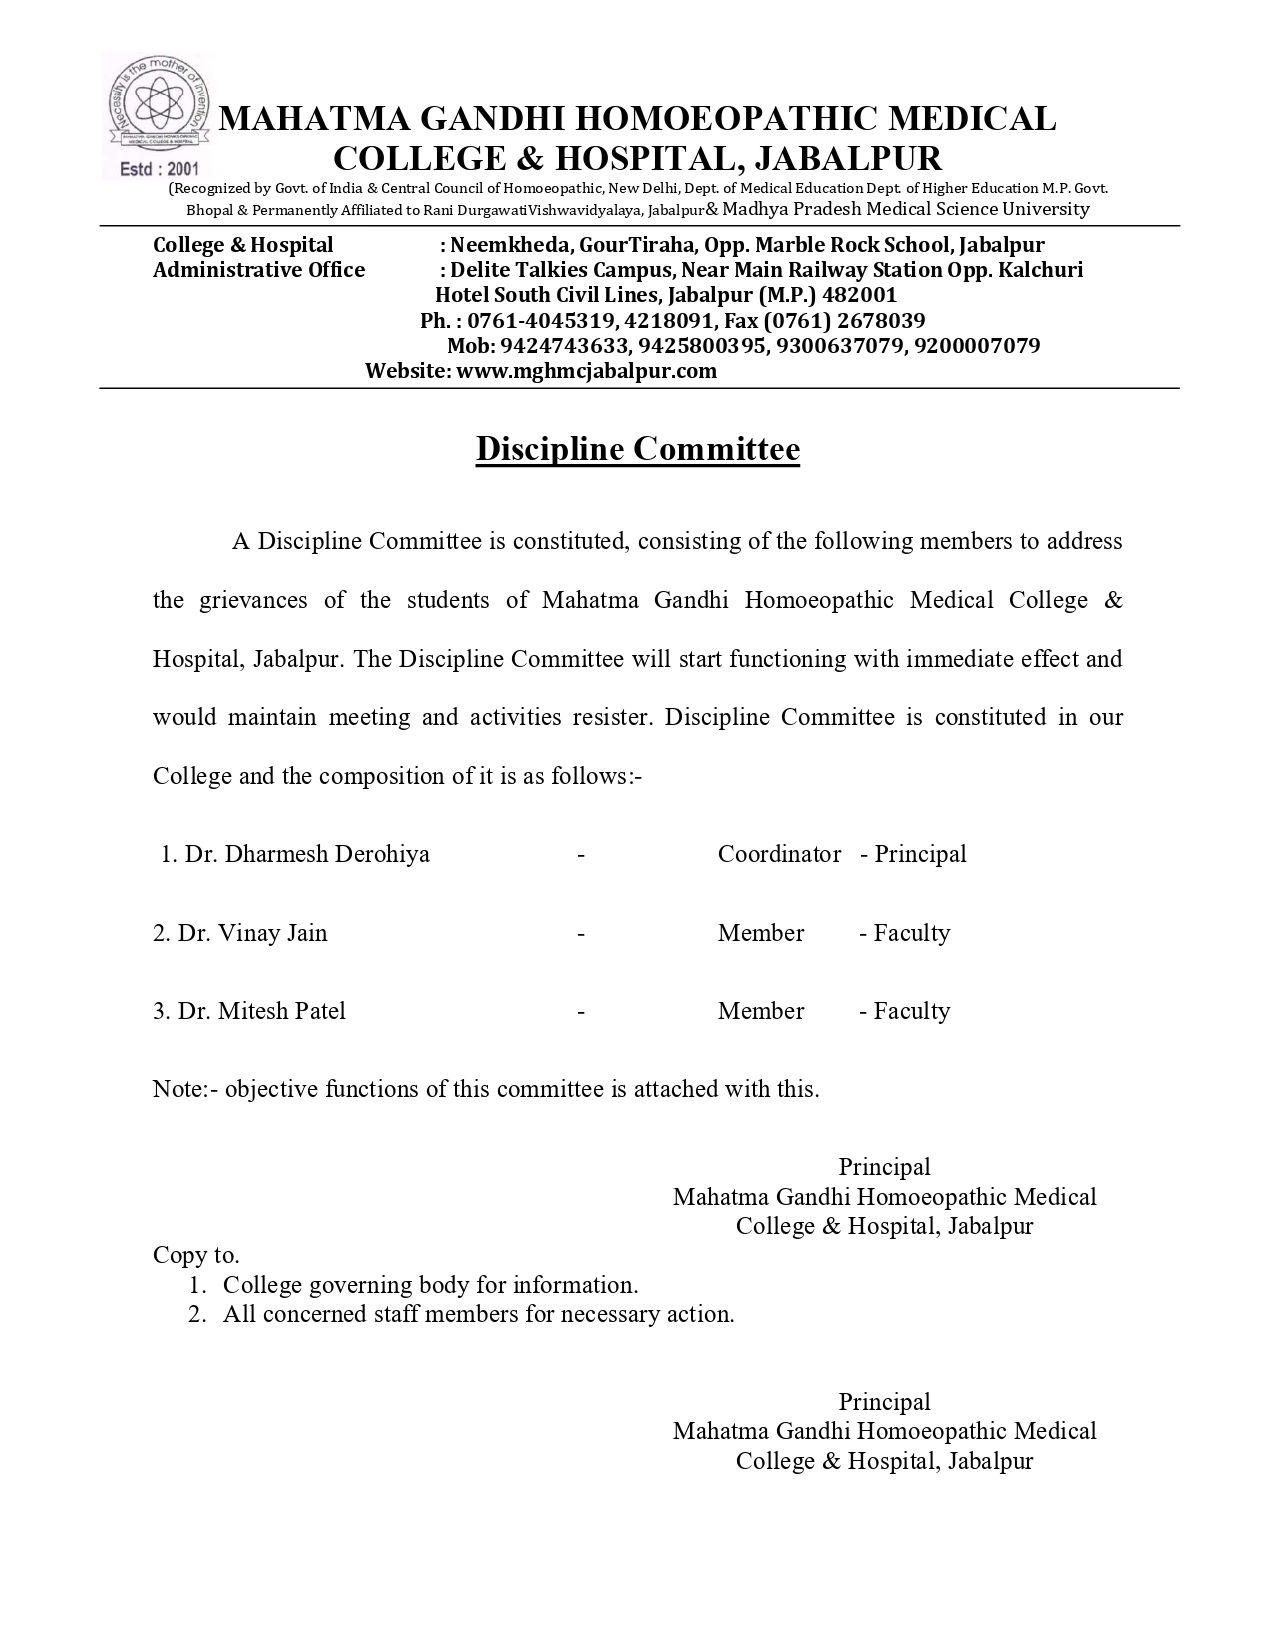 Mahatma Gandhi Homoeopathic Medical College & Hospital Discipline Committee